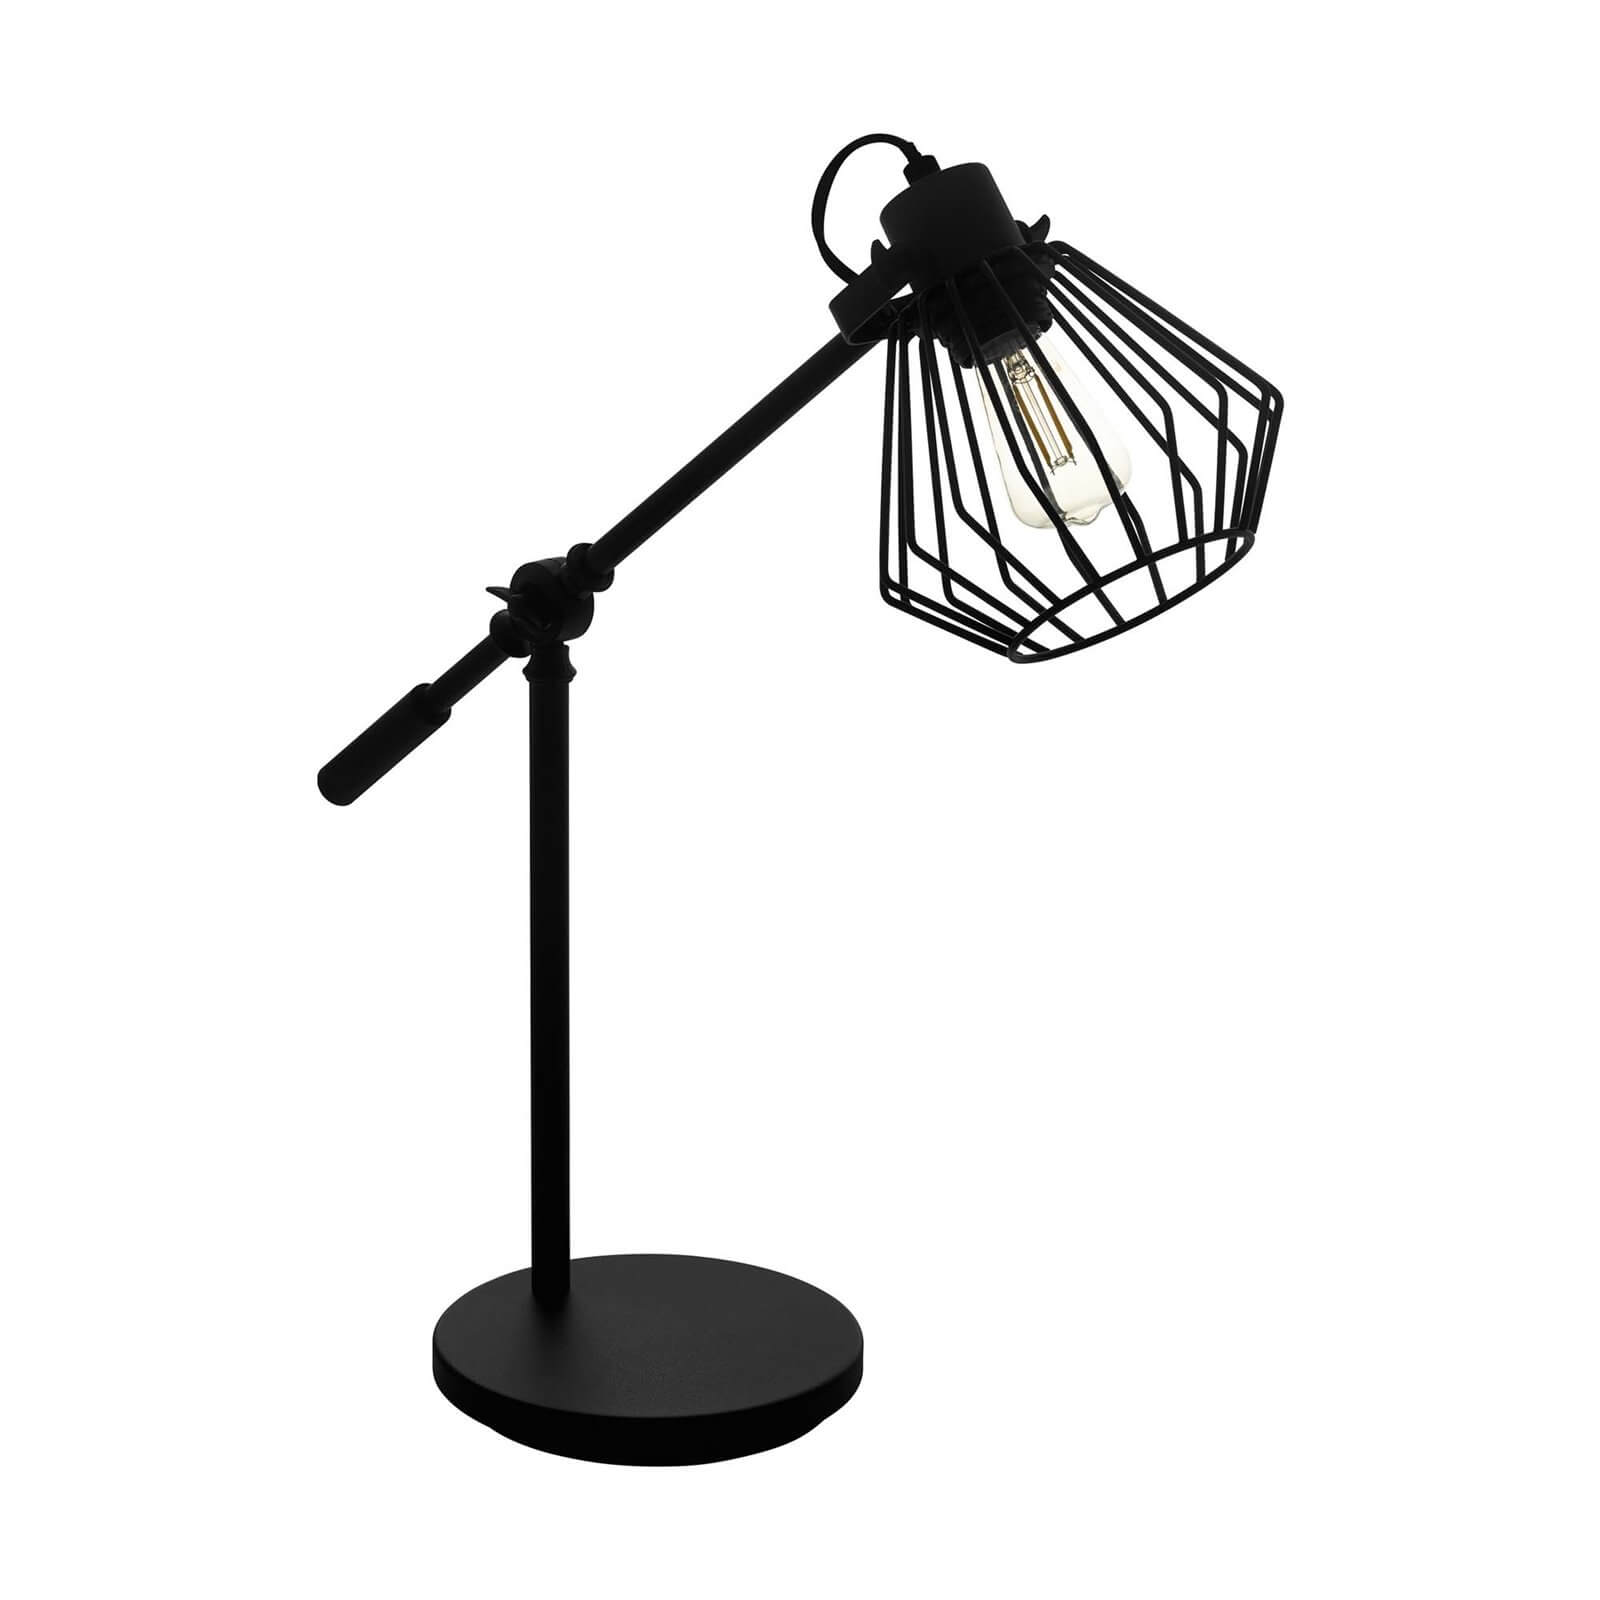 EGLO Tabillano 1 Industrial Black Caged Table Lamp